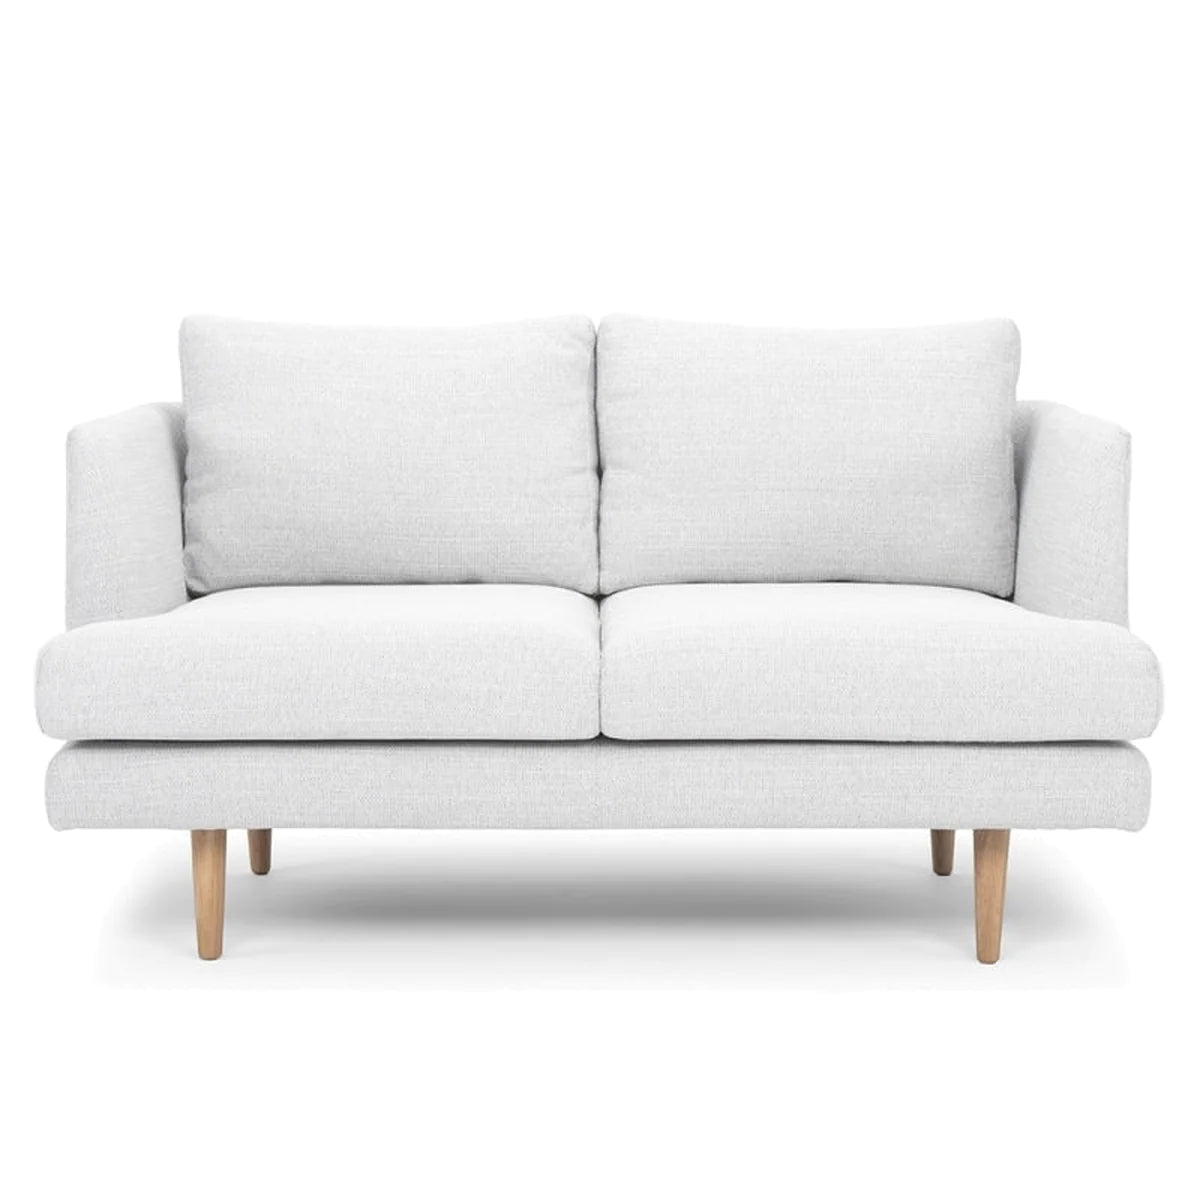 Beech wood sofa 85×180 cm-SBF13